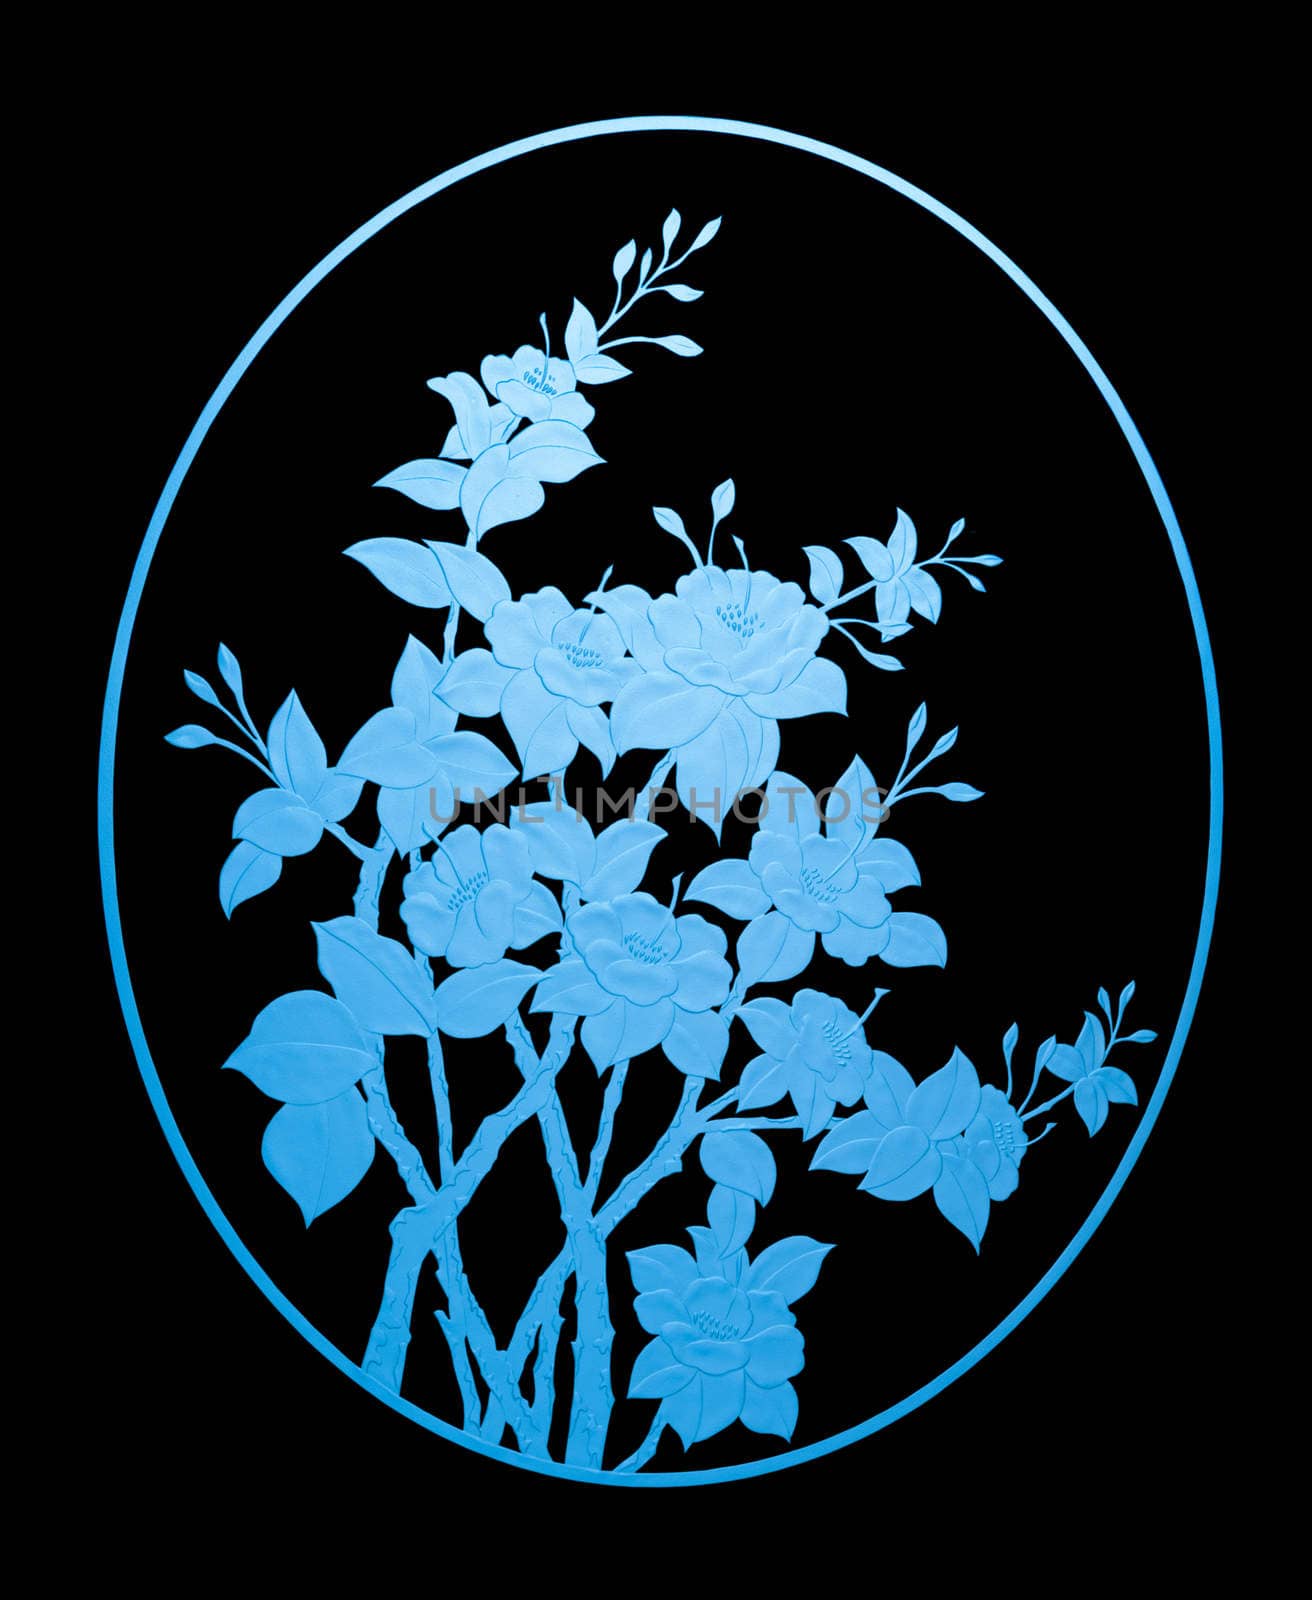 Pattern blue flower of glass on black background by Gamjai